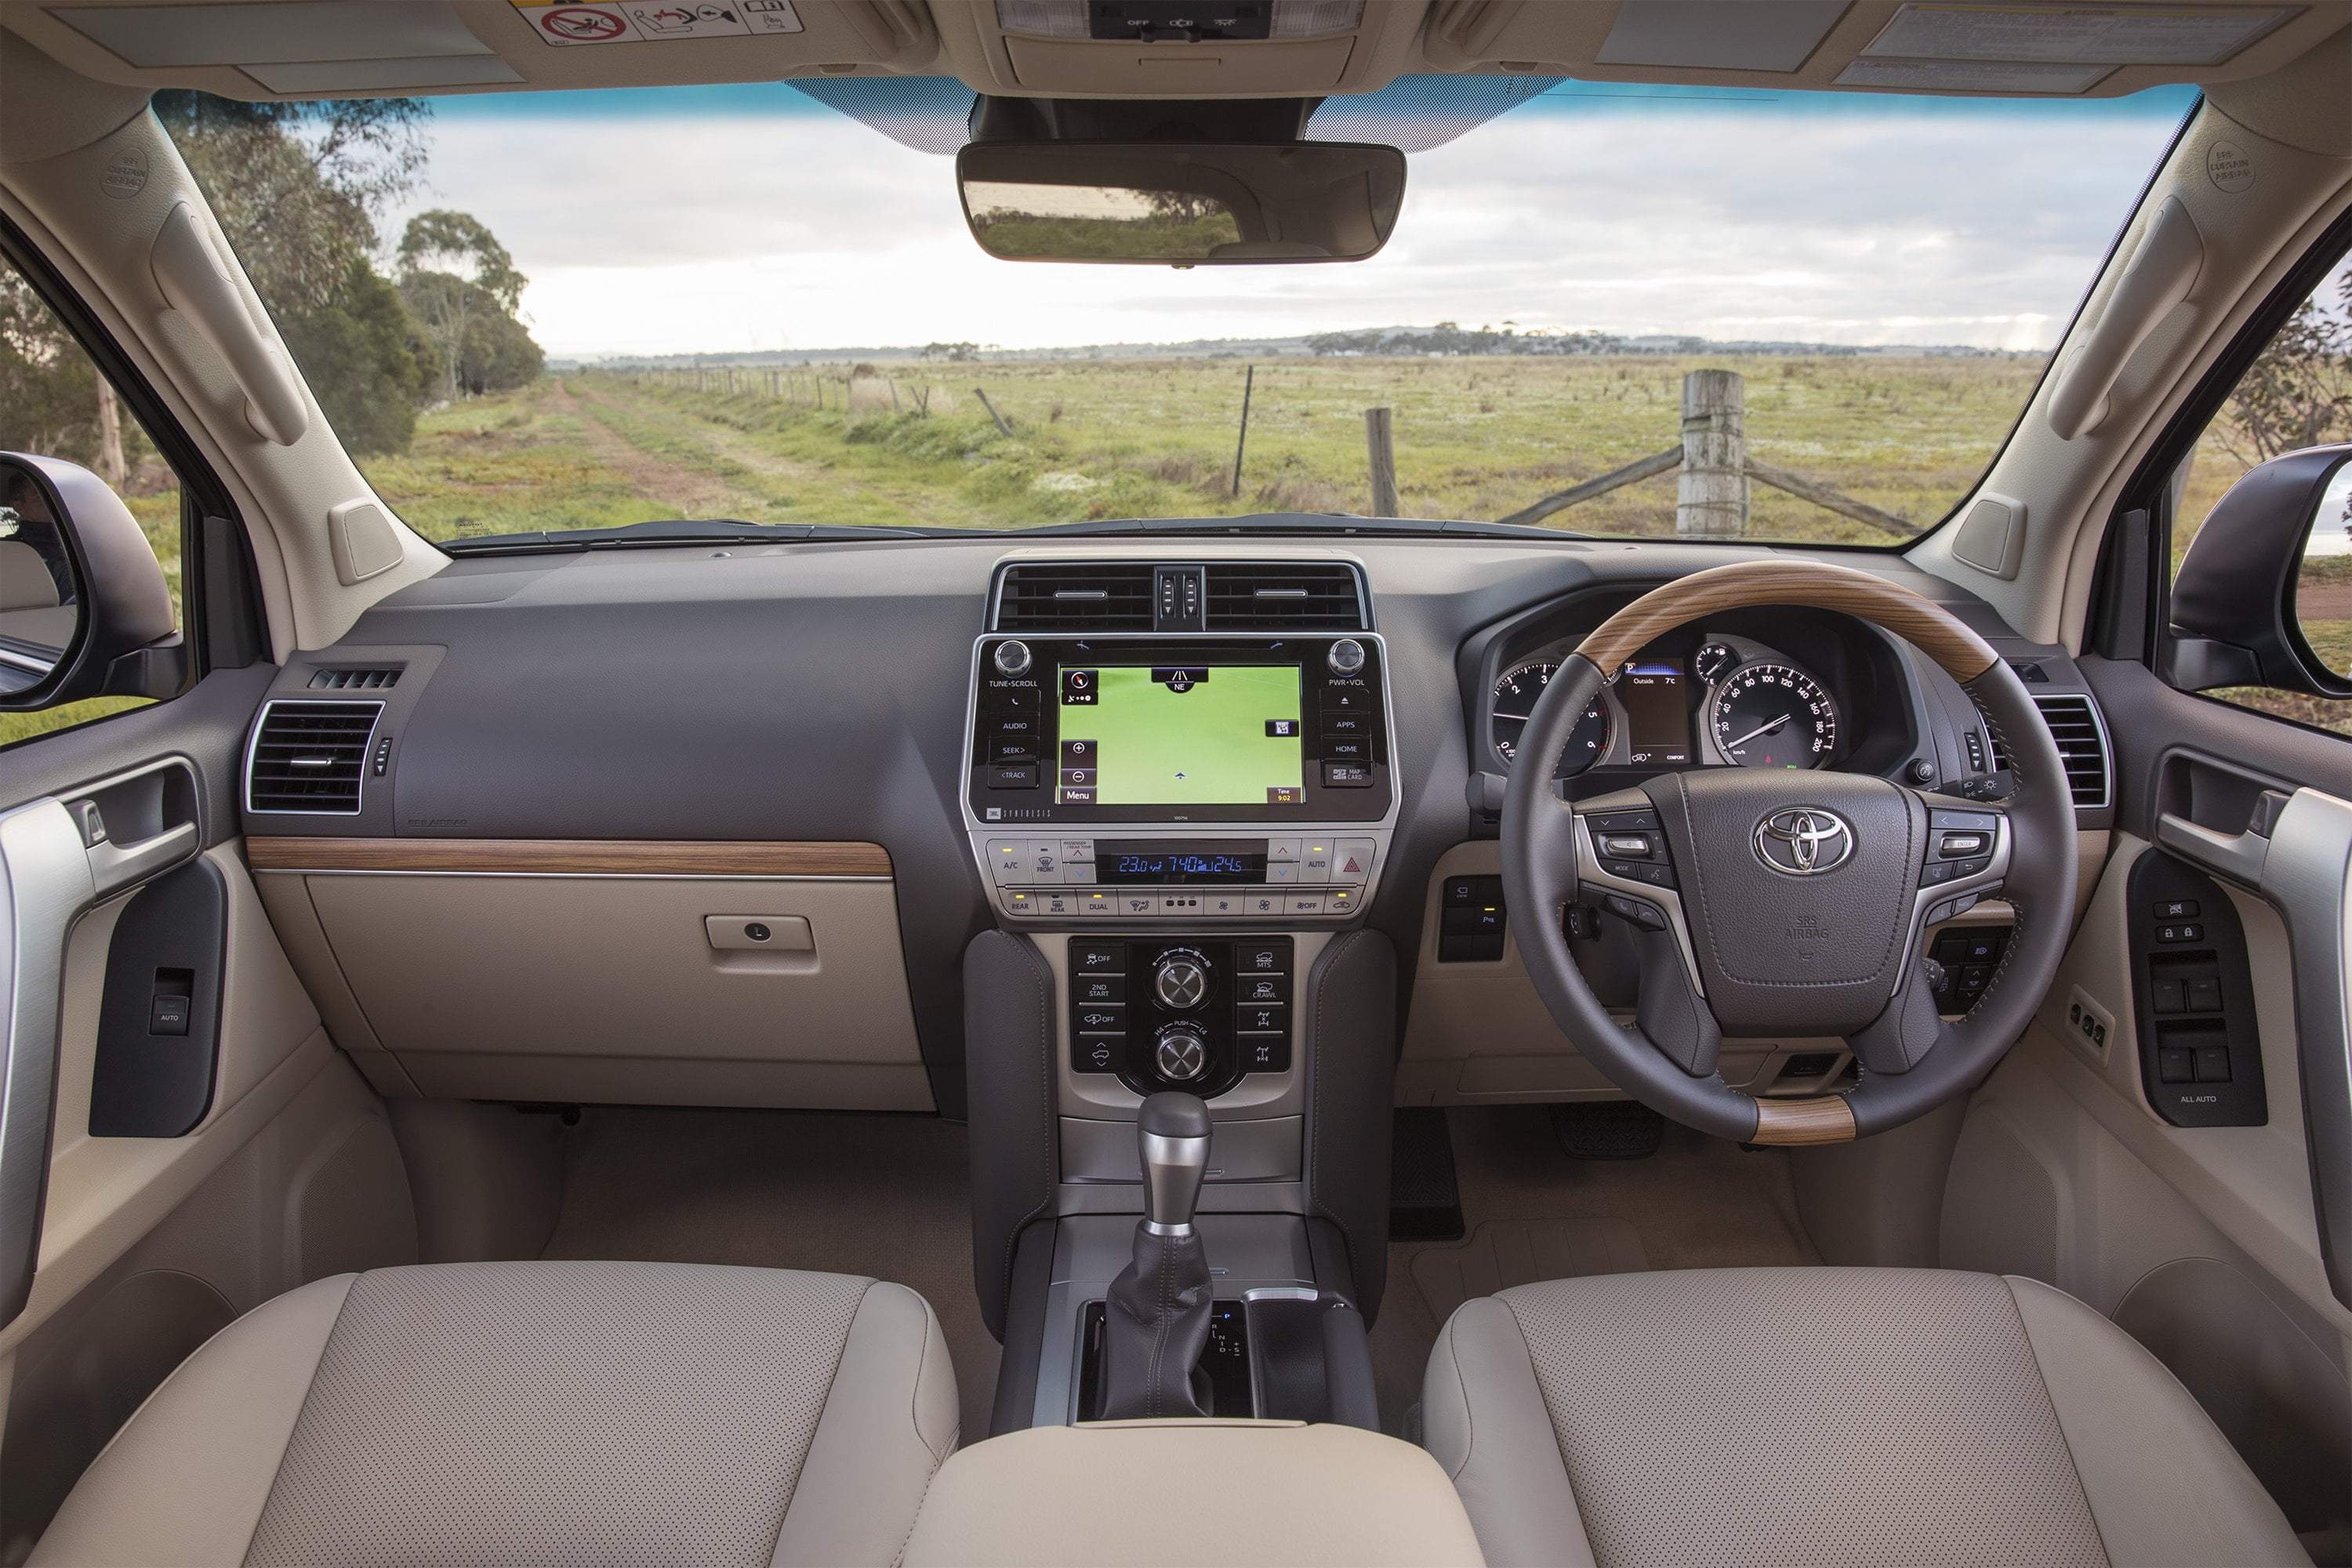 2019 Toyota Prado Kakadu Review - OzRoamer